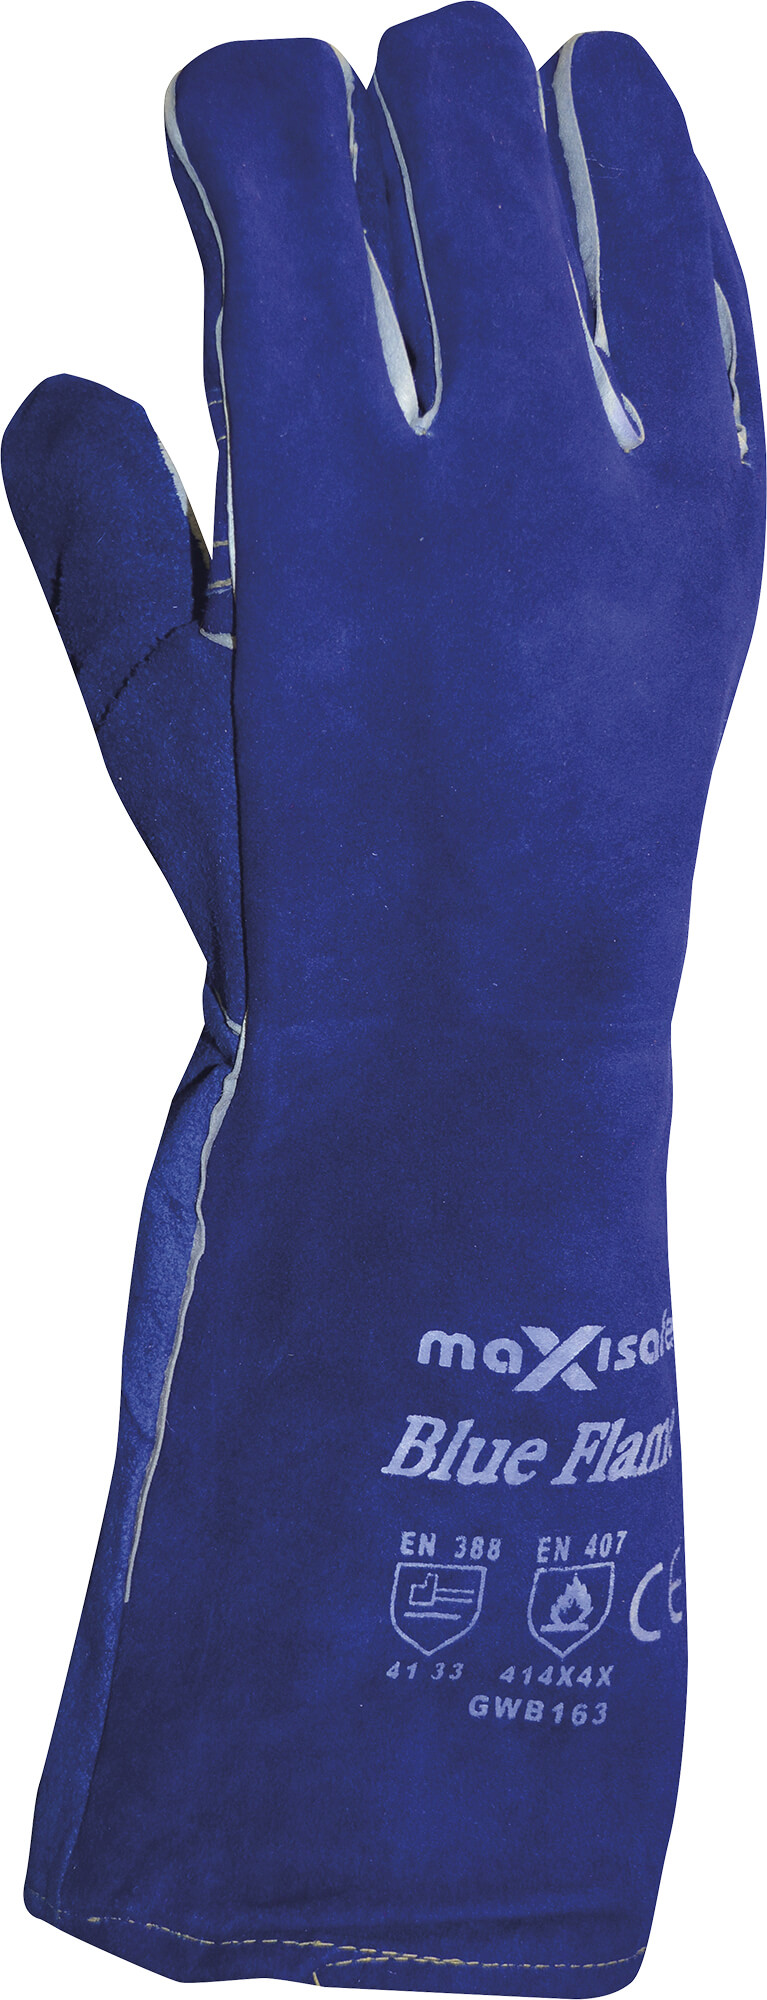 GWB163b ‘Blue Flame’ Premium Kevlar Welder’s Glove